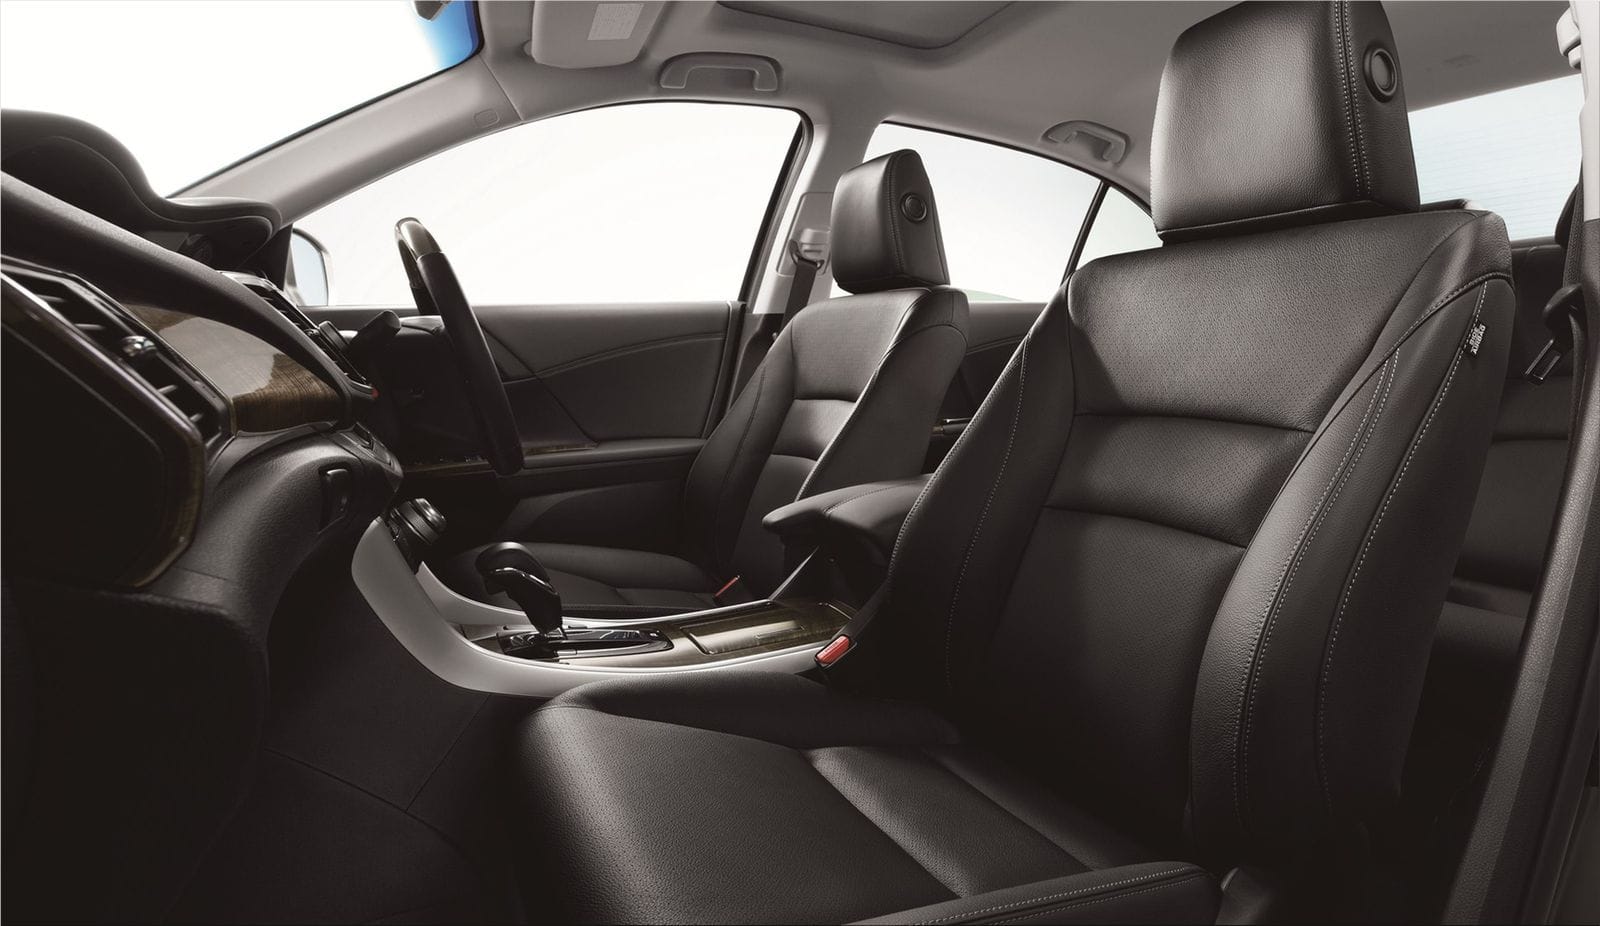 2014 Honda Accord Hybrid ultra-high fuel economy|Honda|Car Division